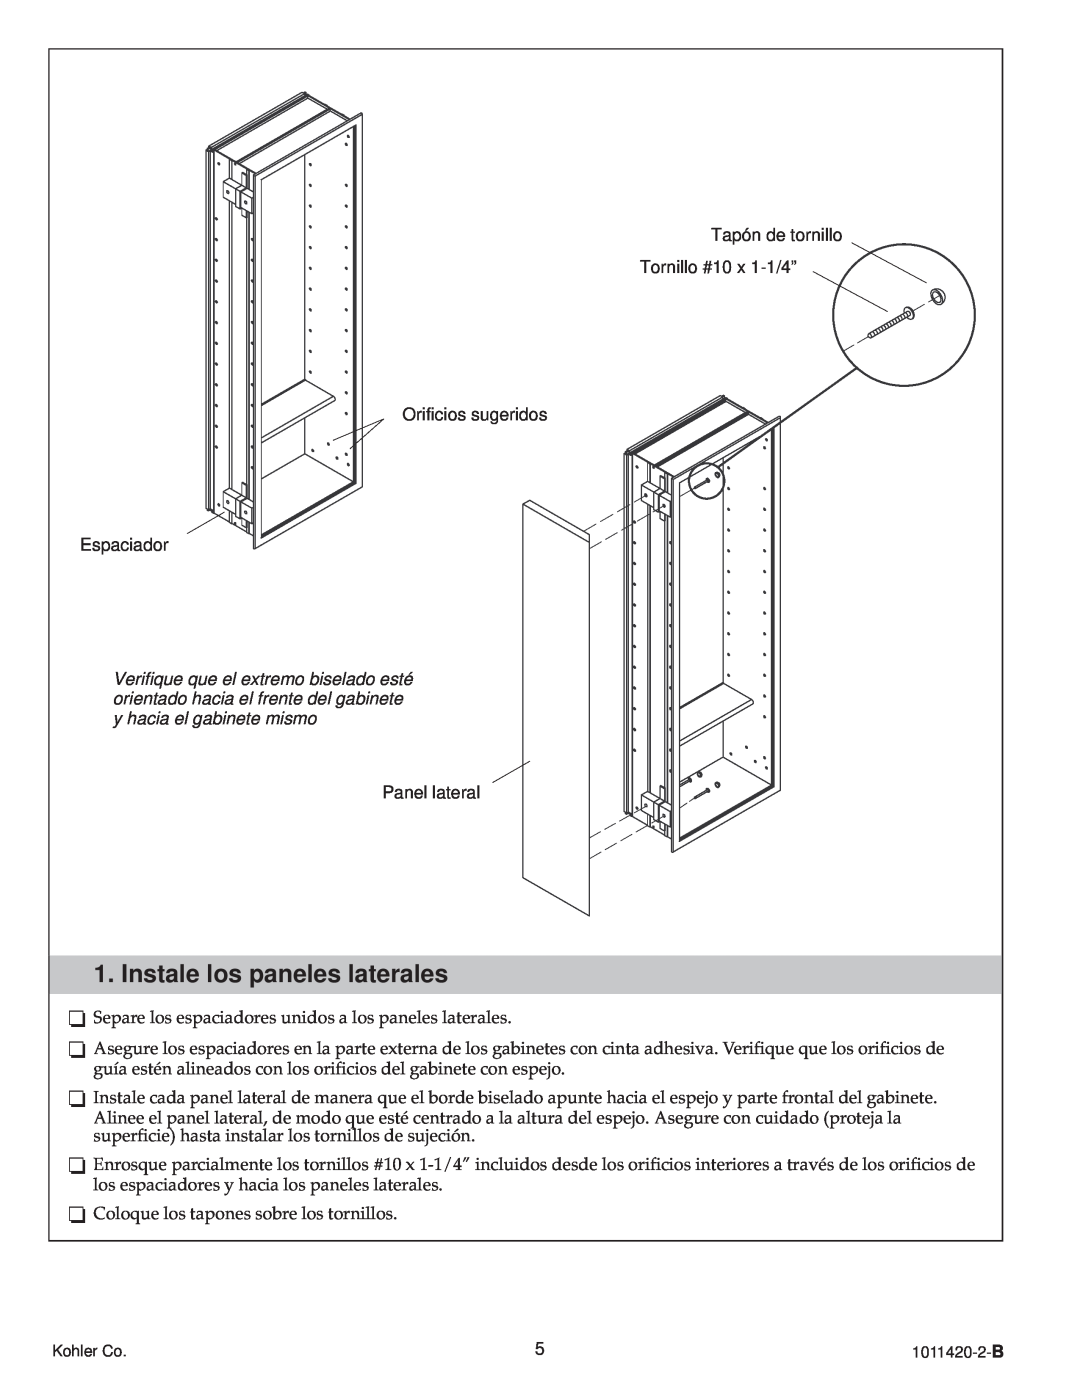 Kohler 1011420-2-B, K-3094 manual Instale los paneles laterales 